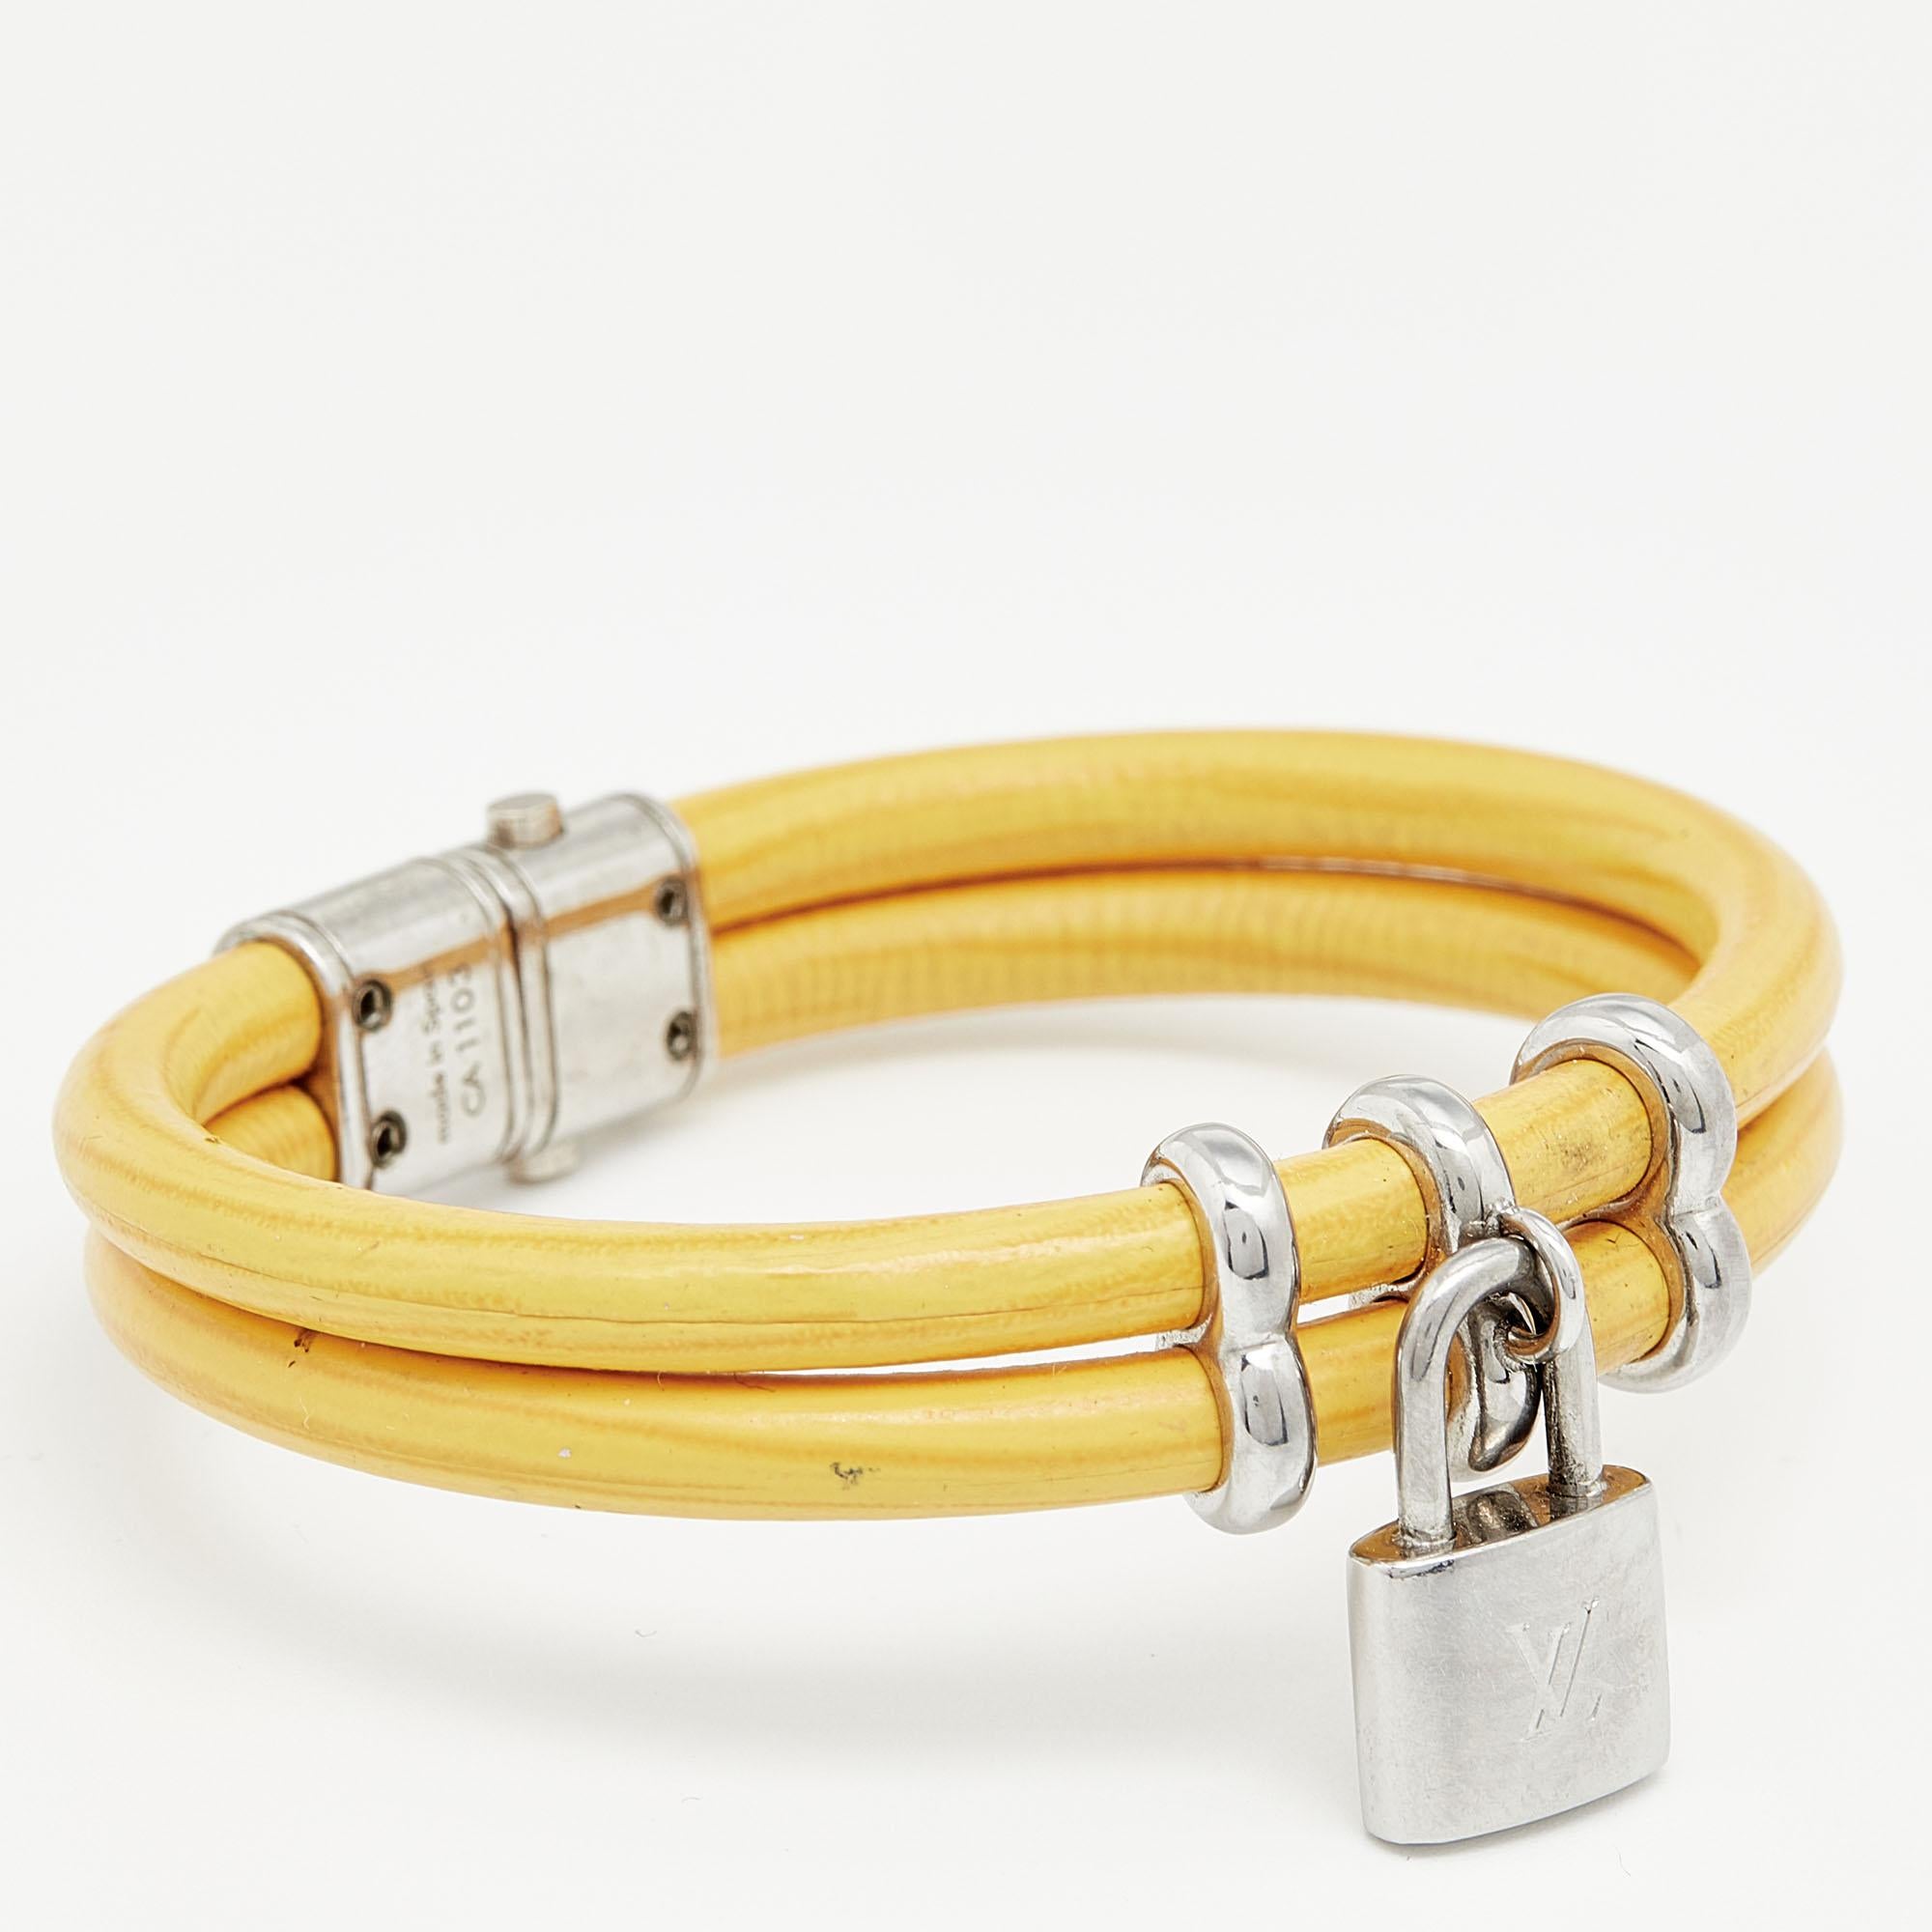 Louis Vuitton, A Keep it twice monogram bracelet. Marked LV